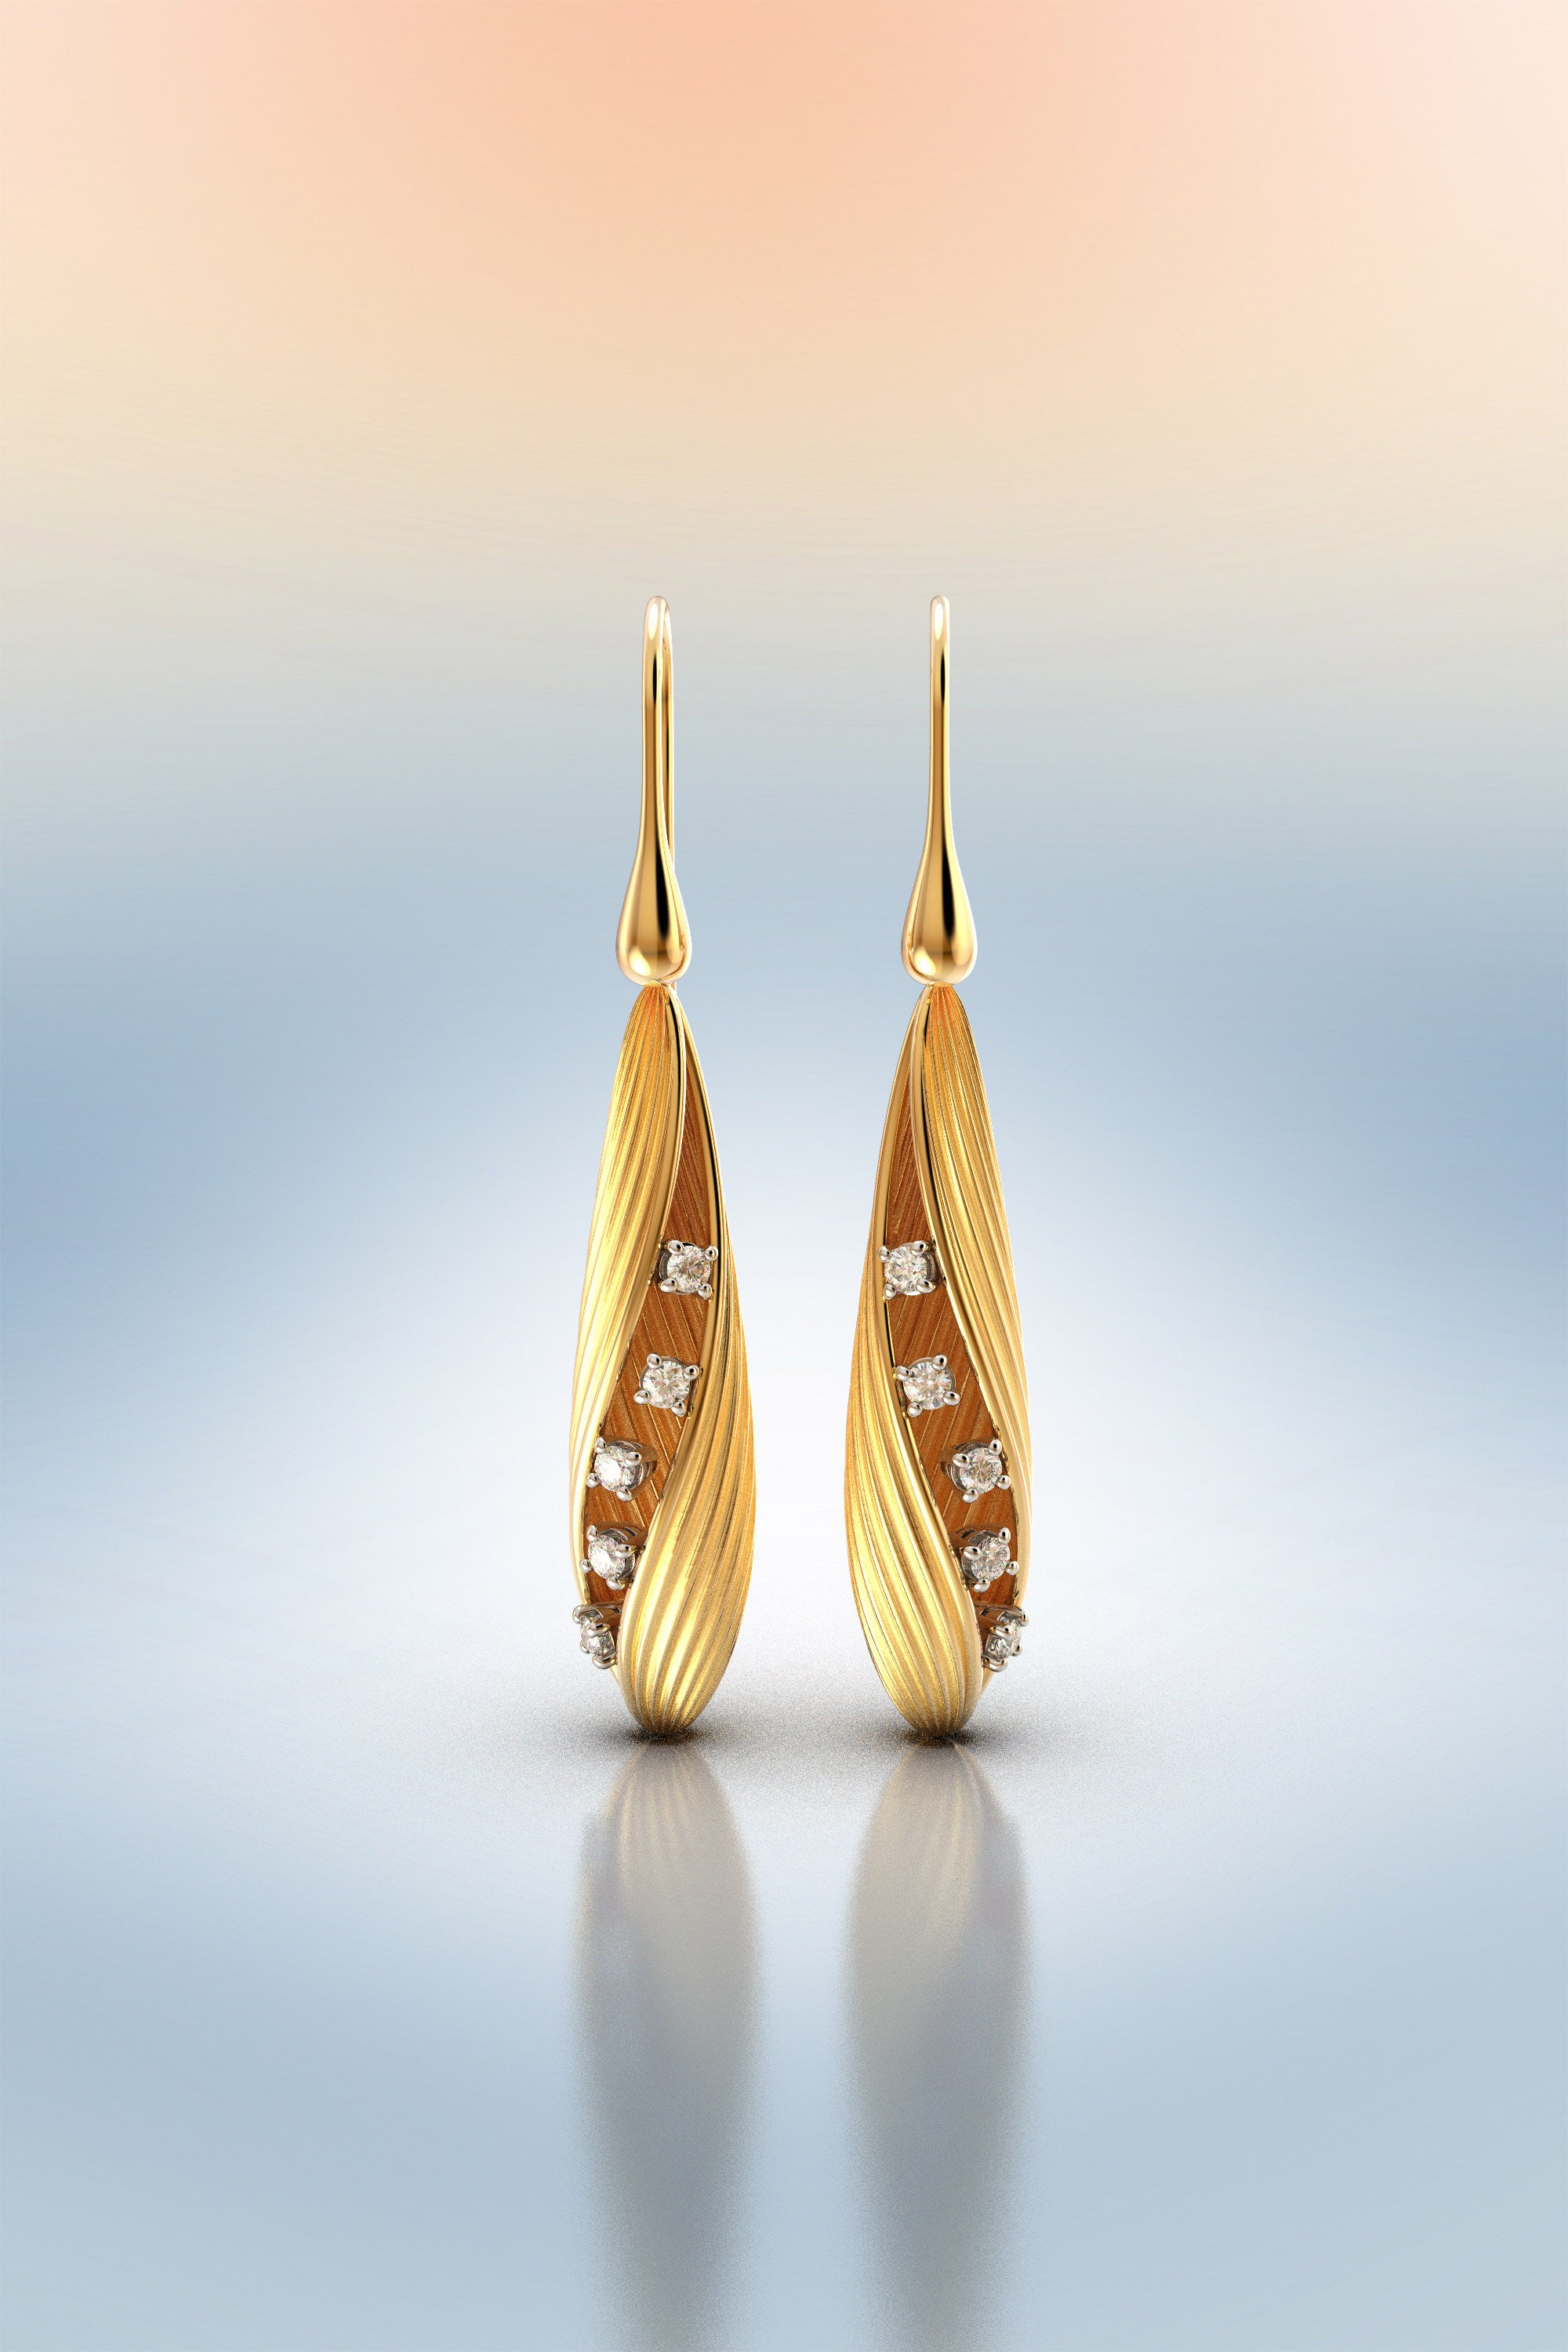 gold earrings designs for daily useearrings for girls earrings designgold  jewellery online gold online jewellery gold earrings new design earrings  diamond stud